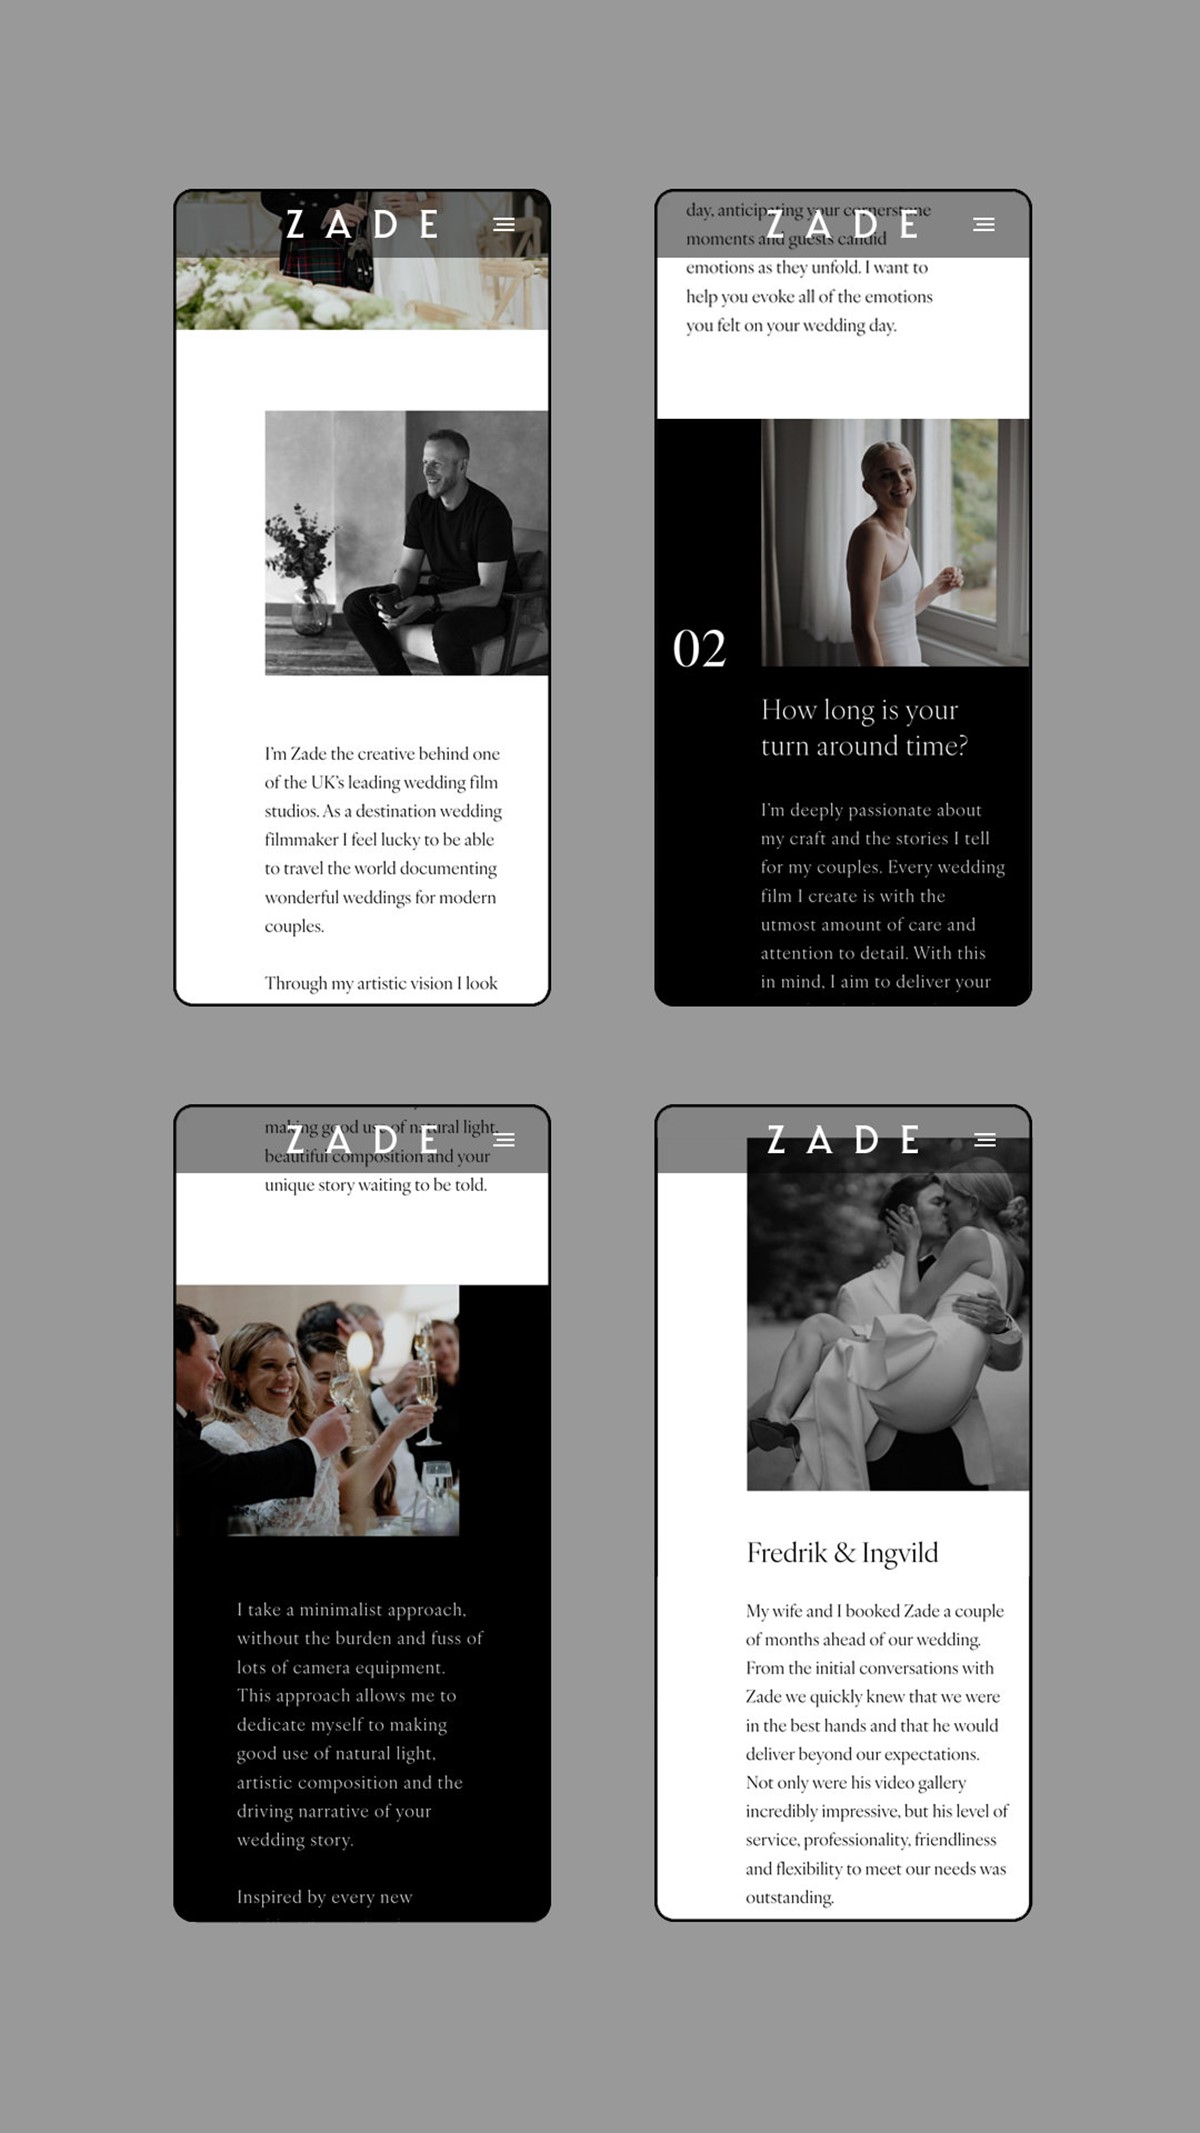 Zade Film Co. Mobile web design + direction by Superfried design studio, Manchester.